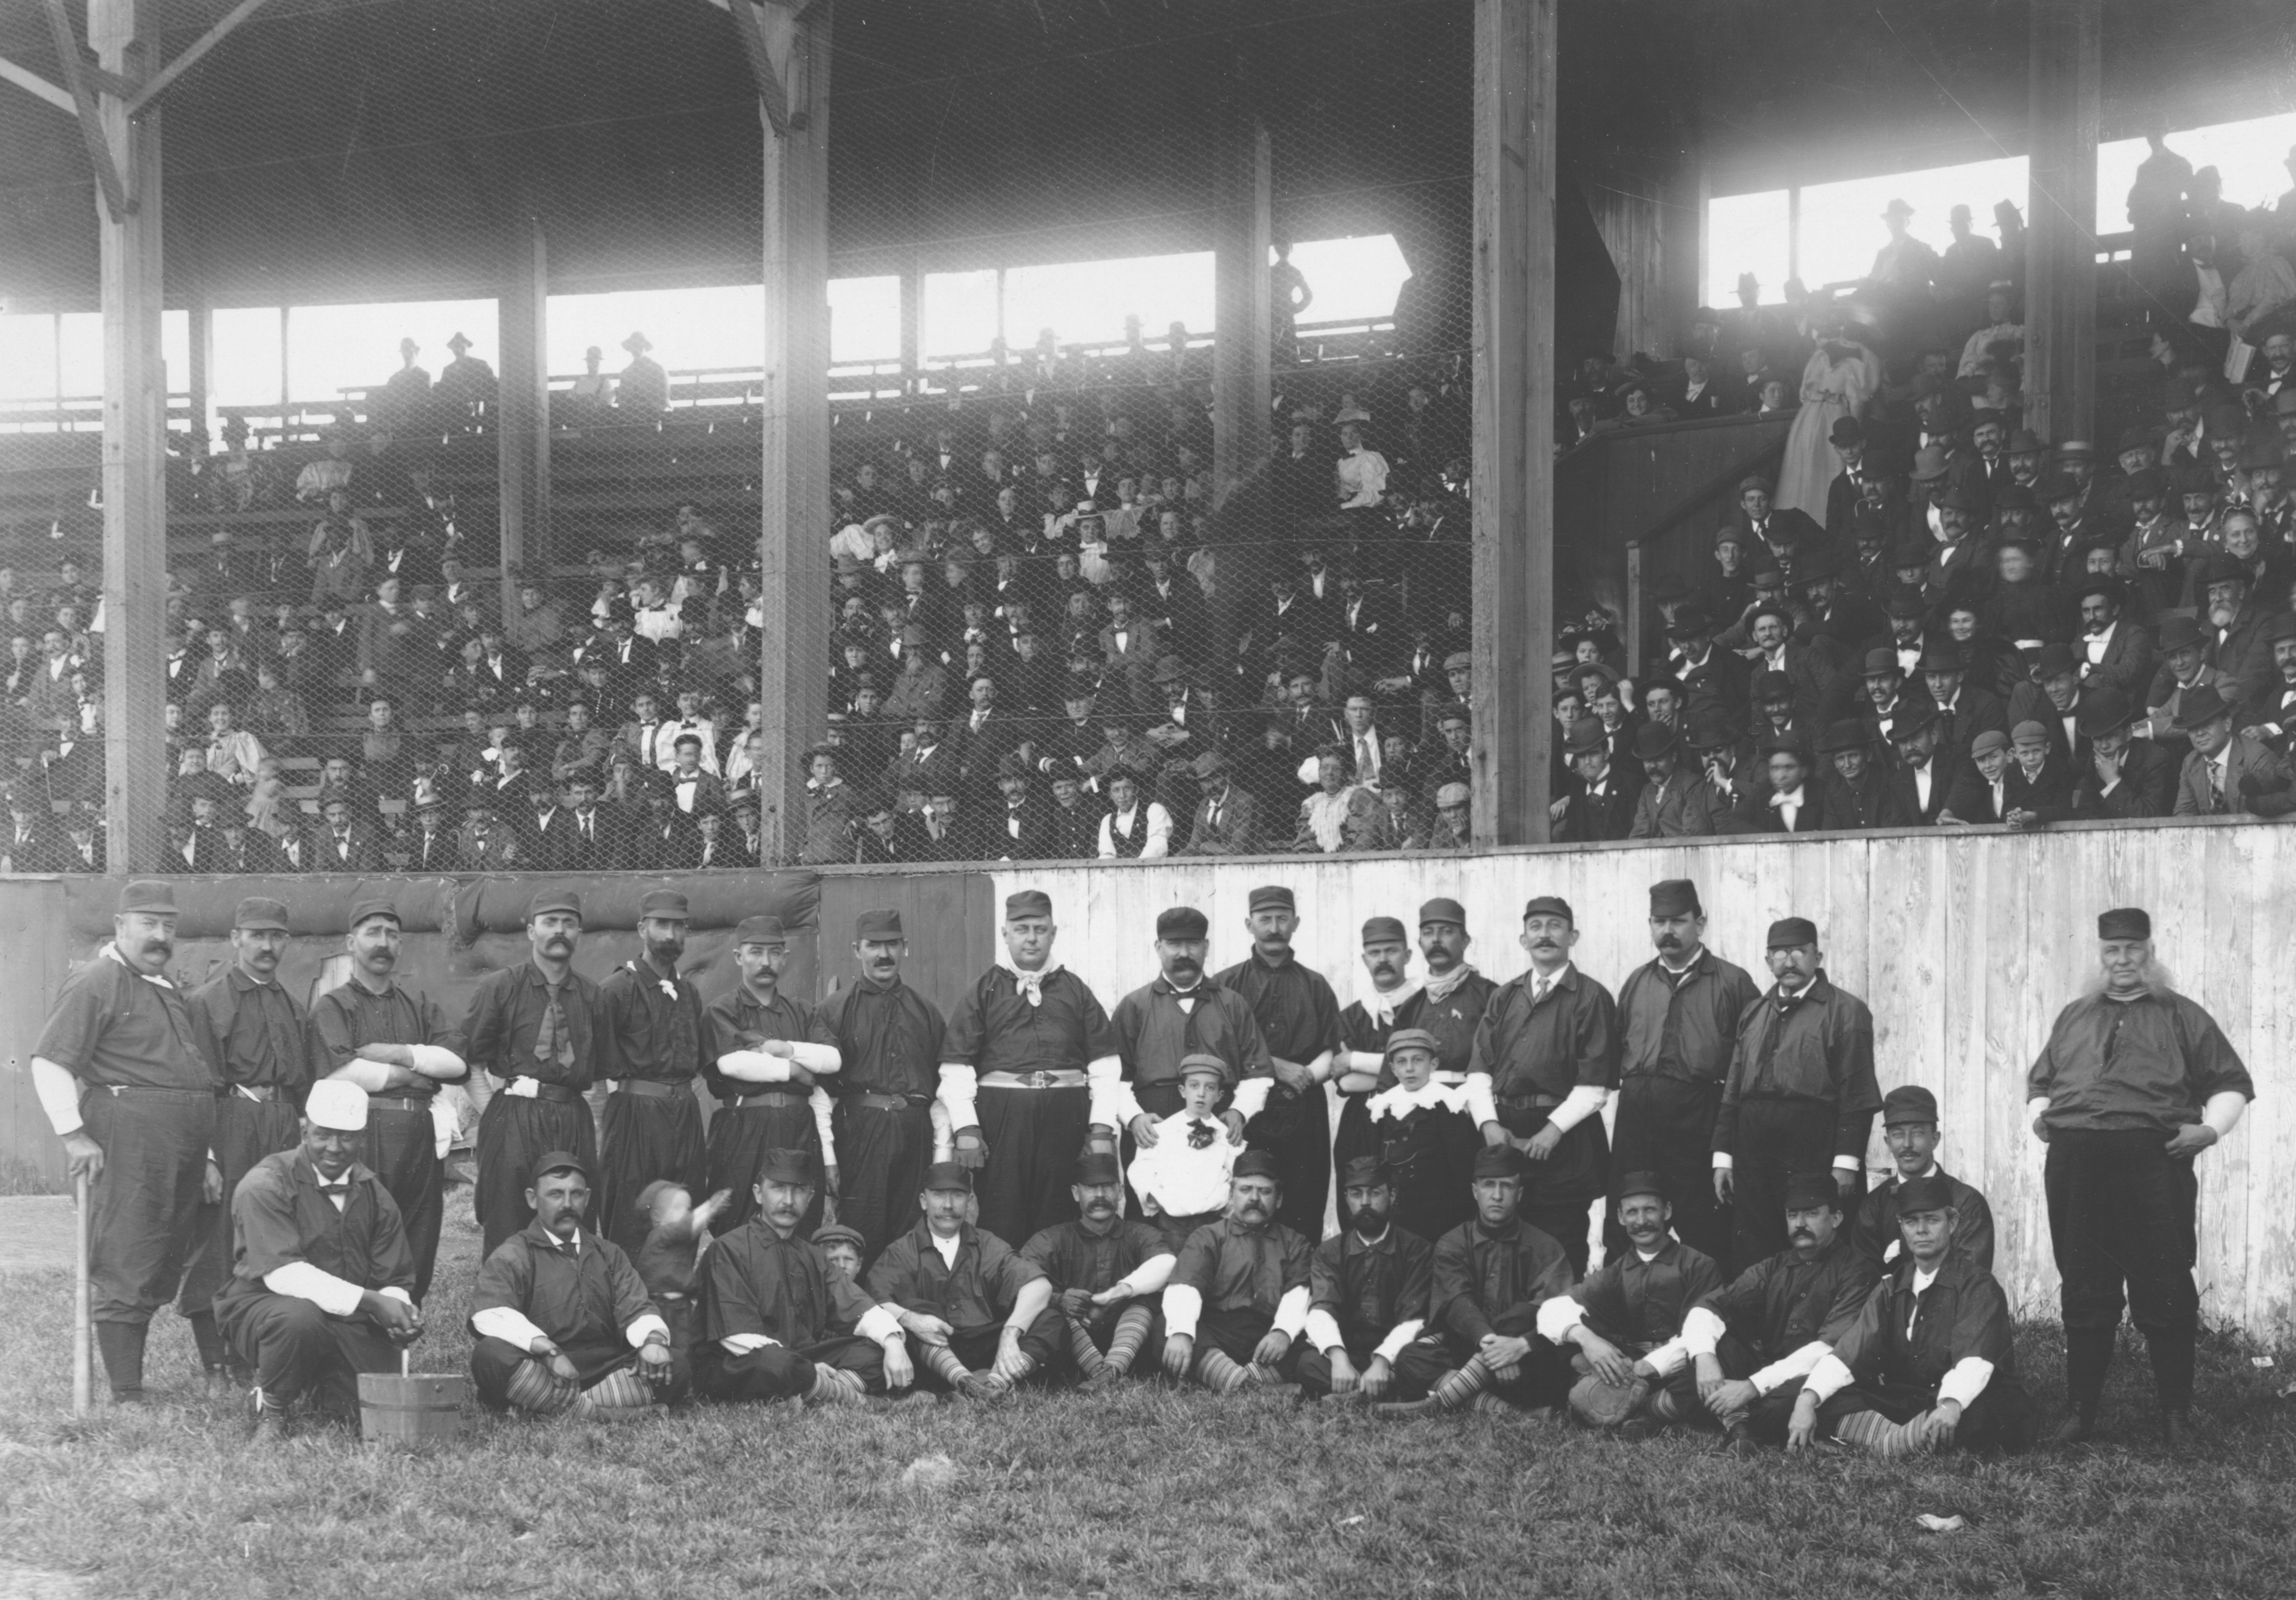 Unidentified Kansas City baseball team, 1880